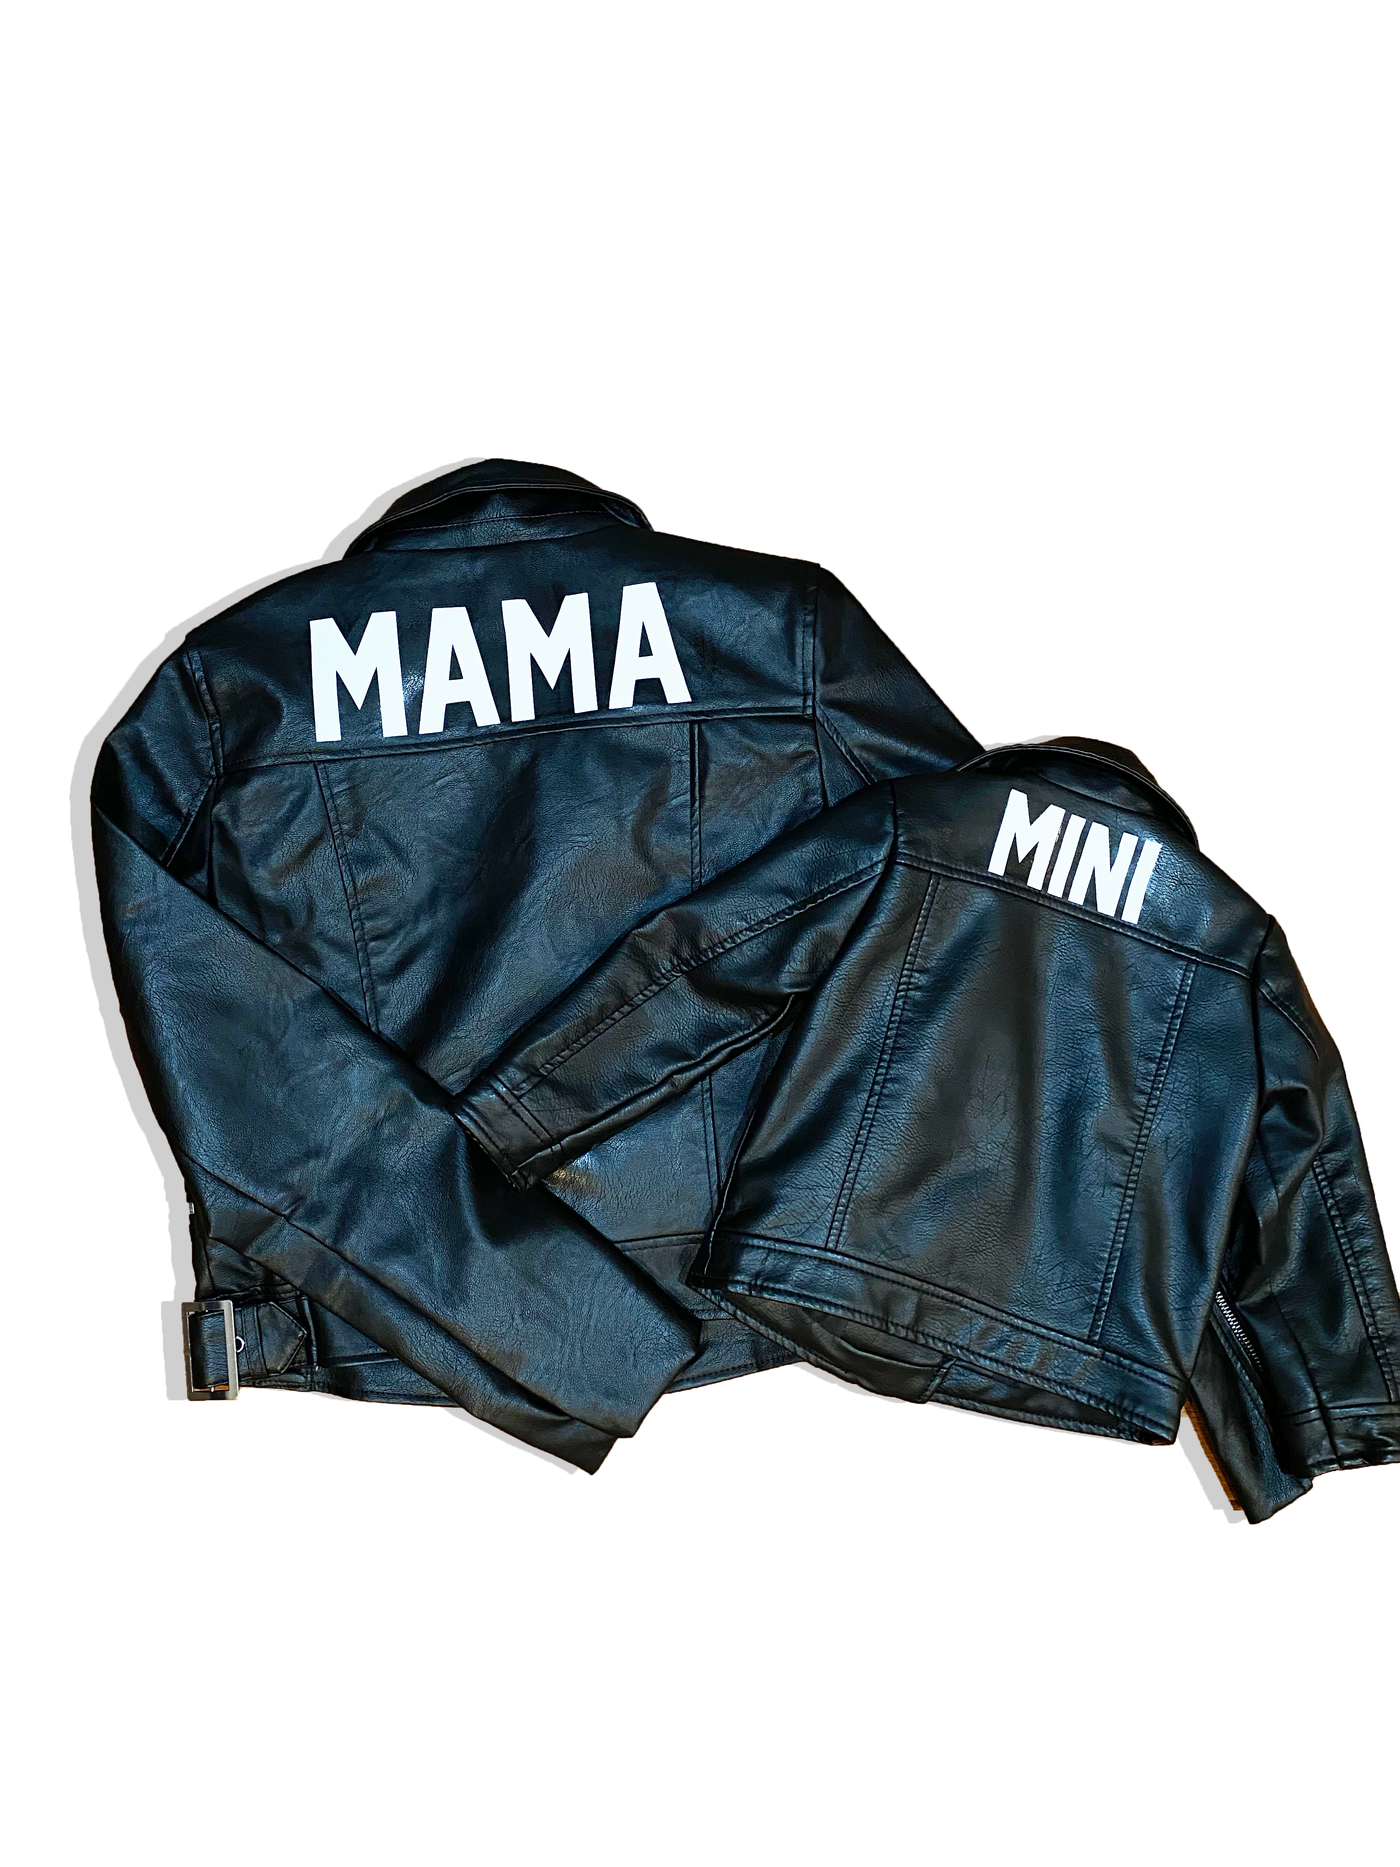 Mama & Mini Black Leather Set